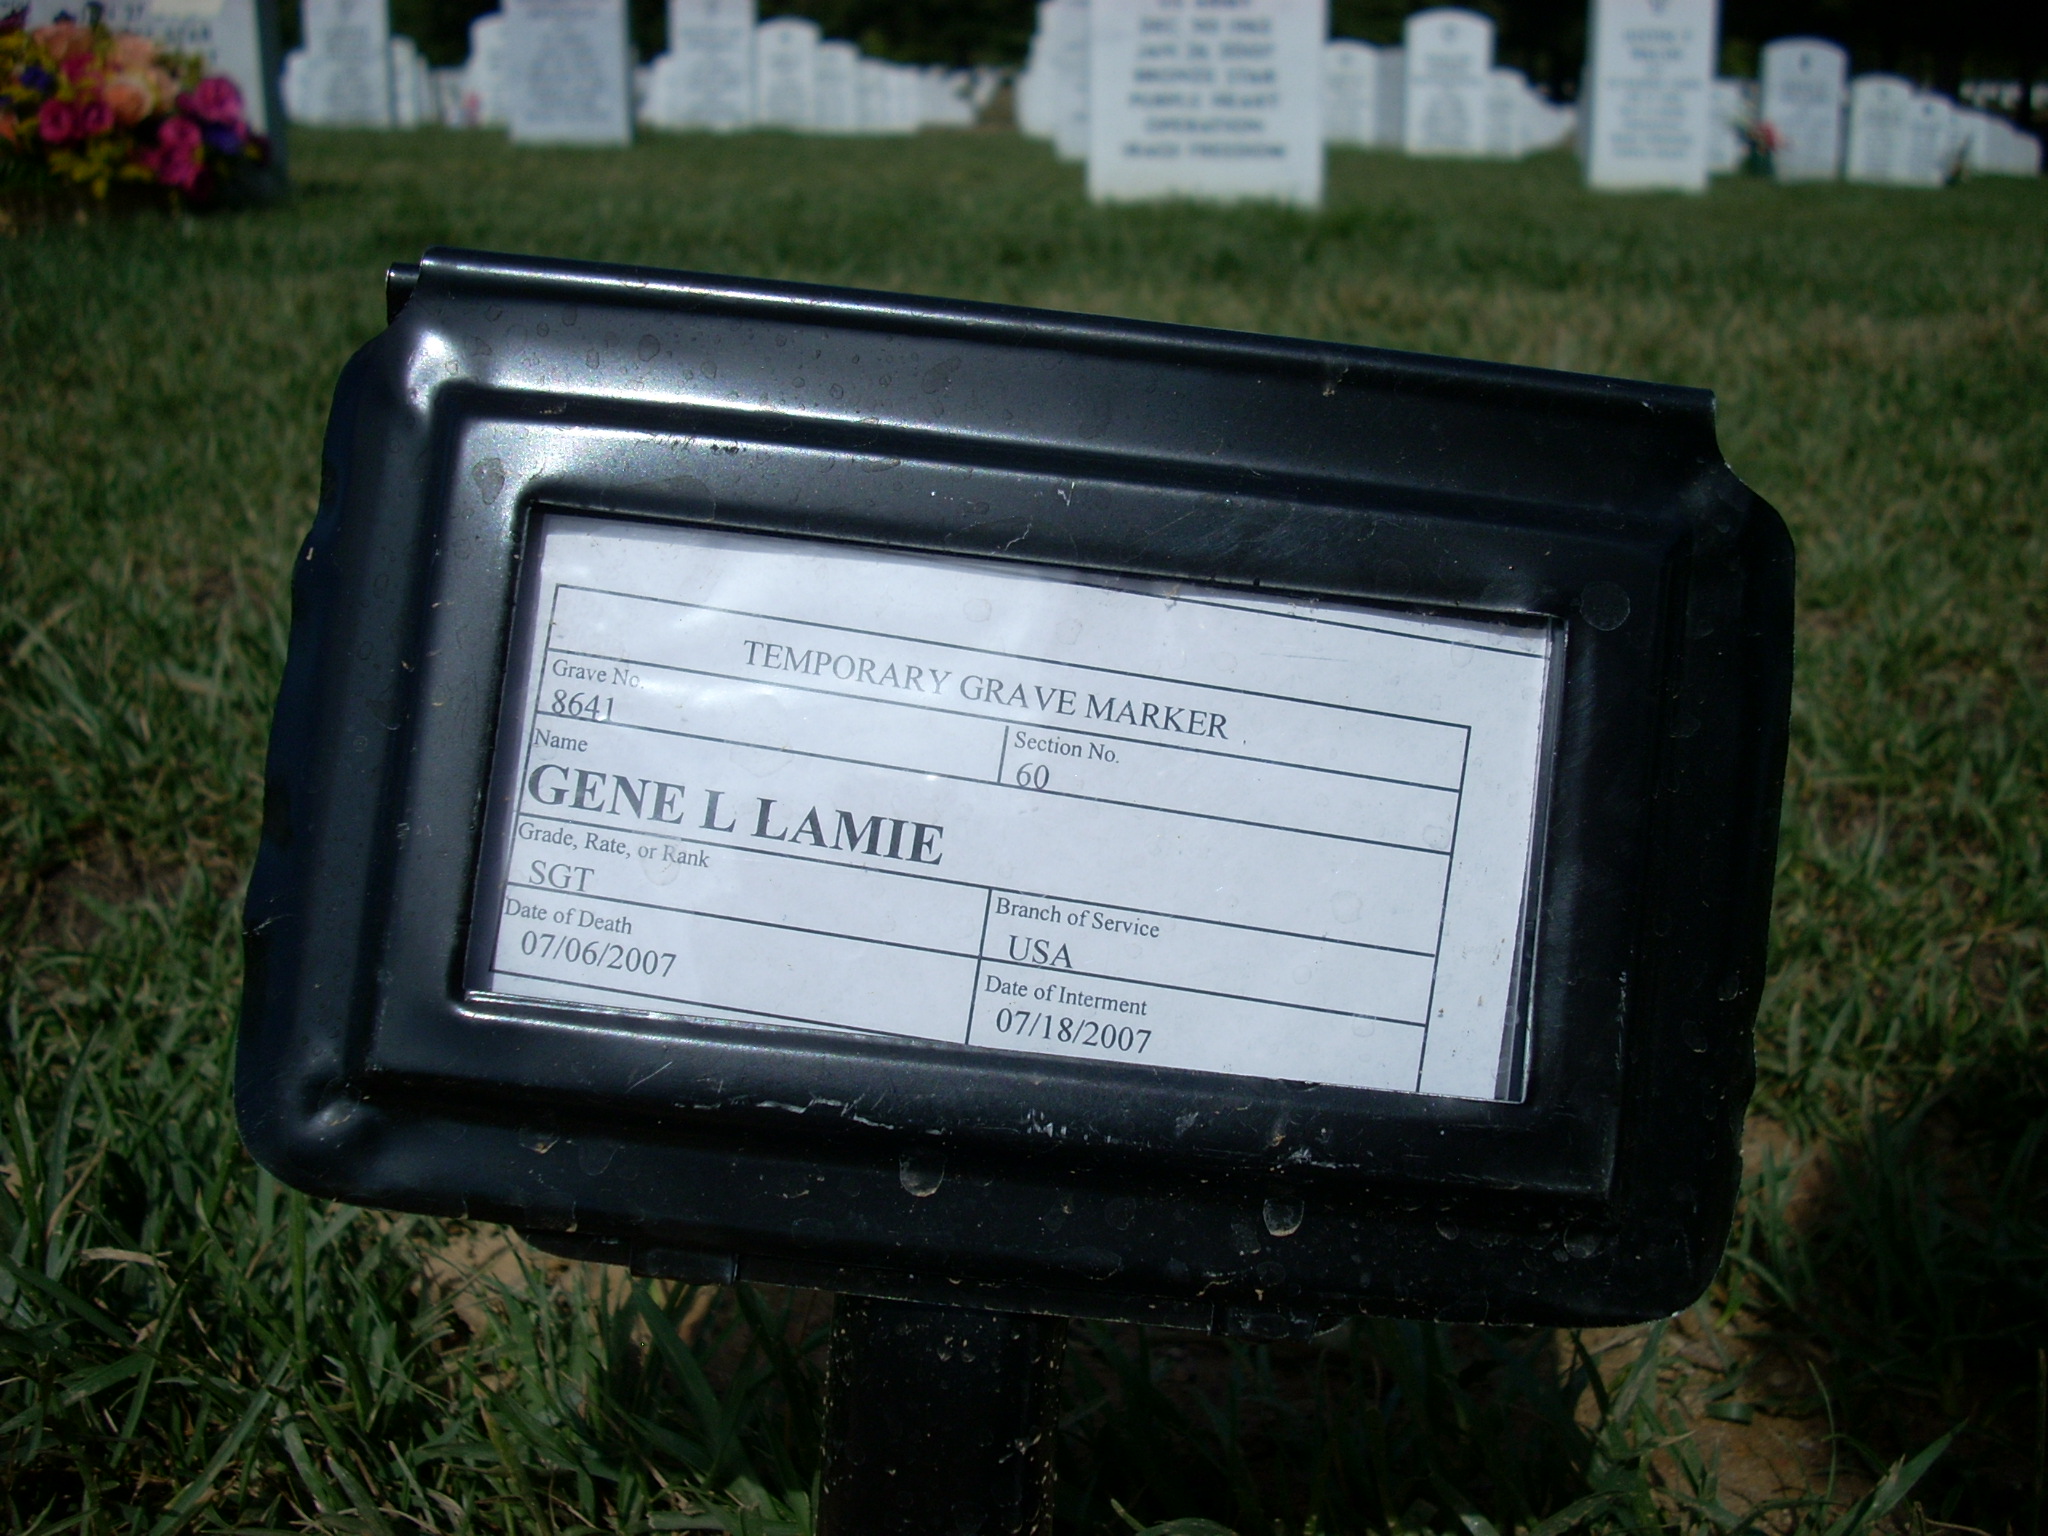 gllamie-gravesite-photo-july-2007-001